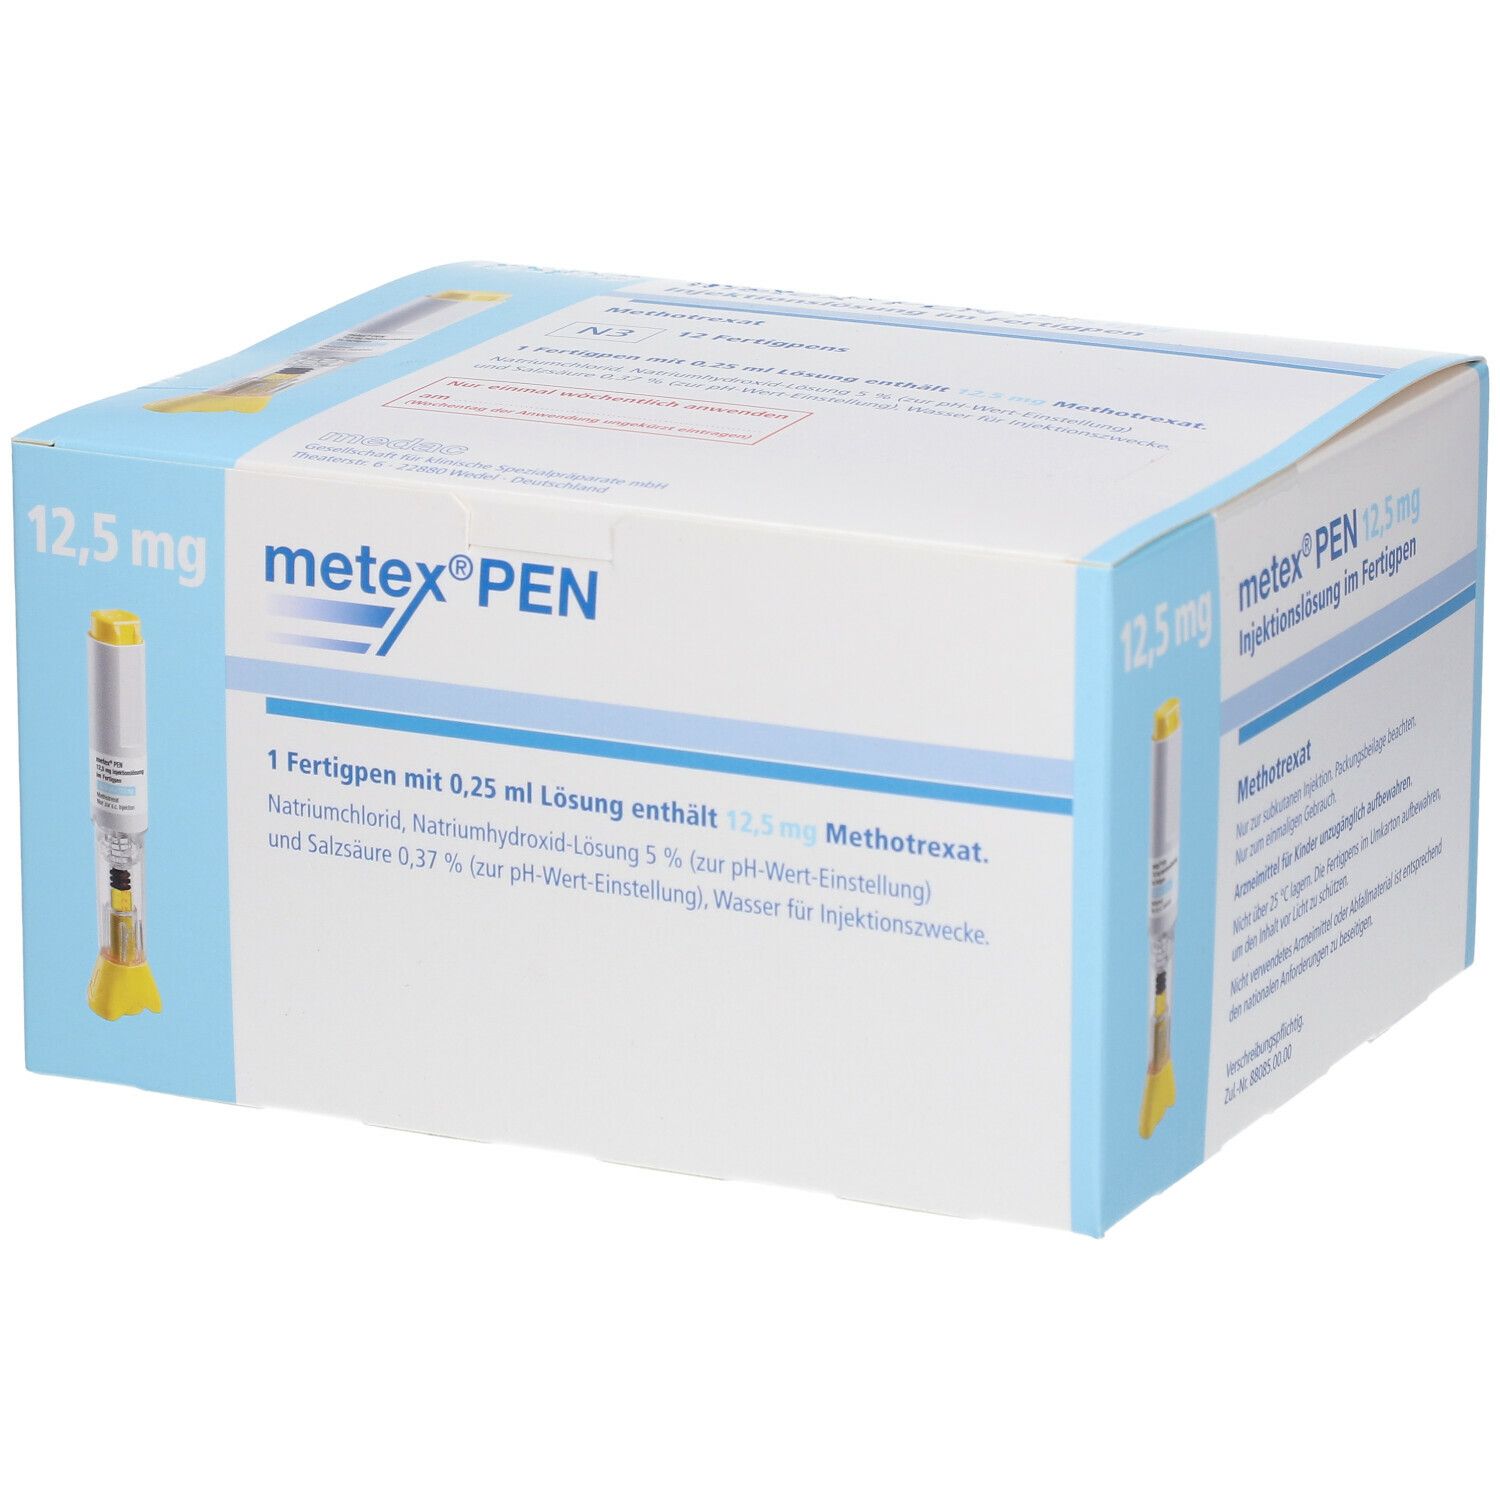 metex® PEN 12,5 mg